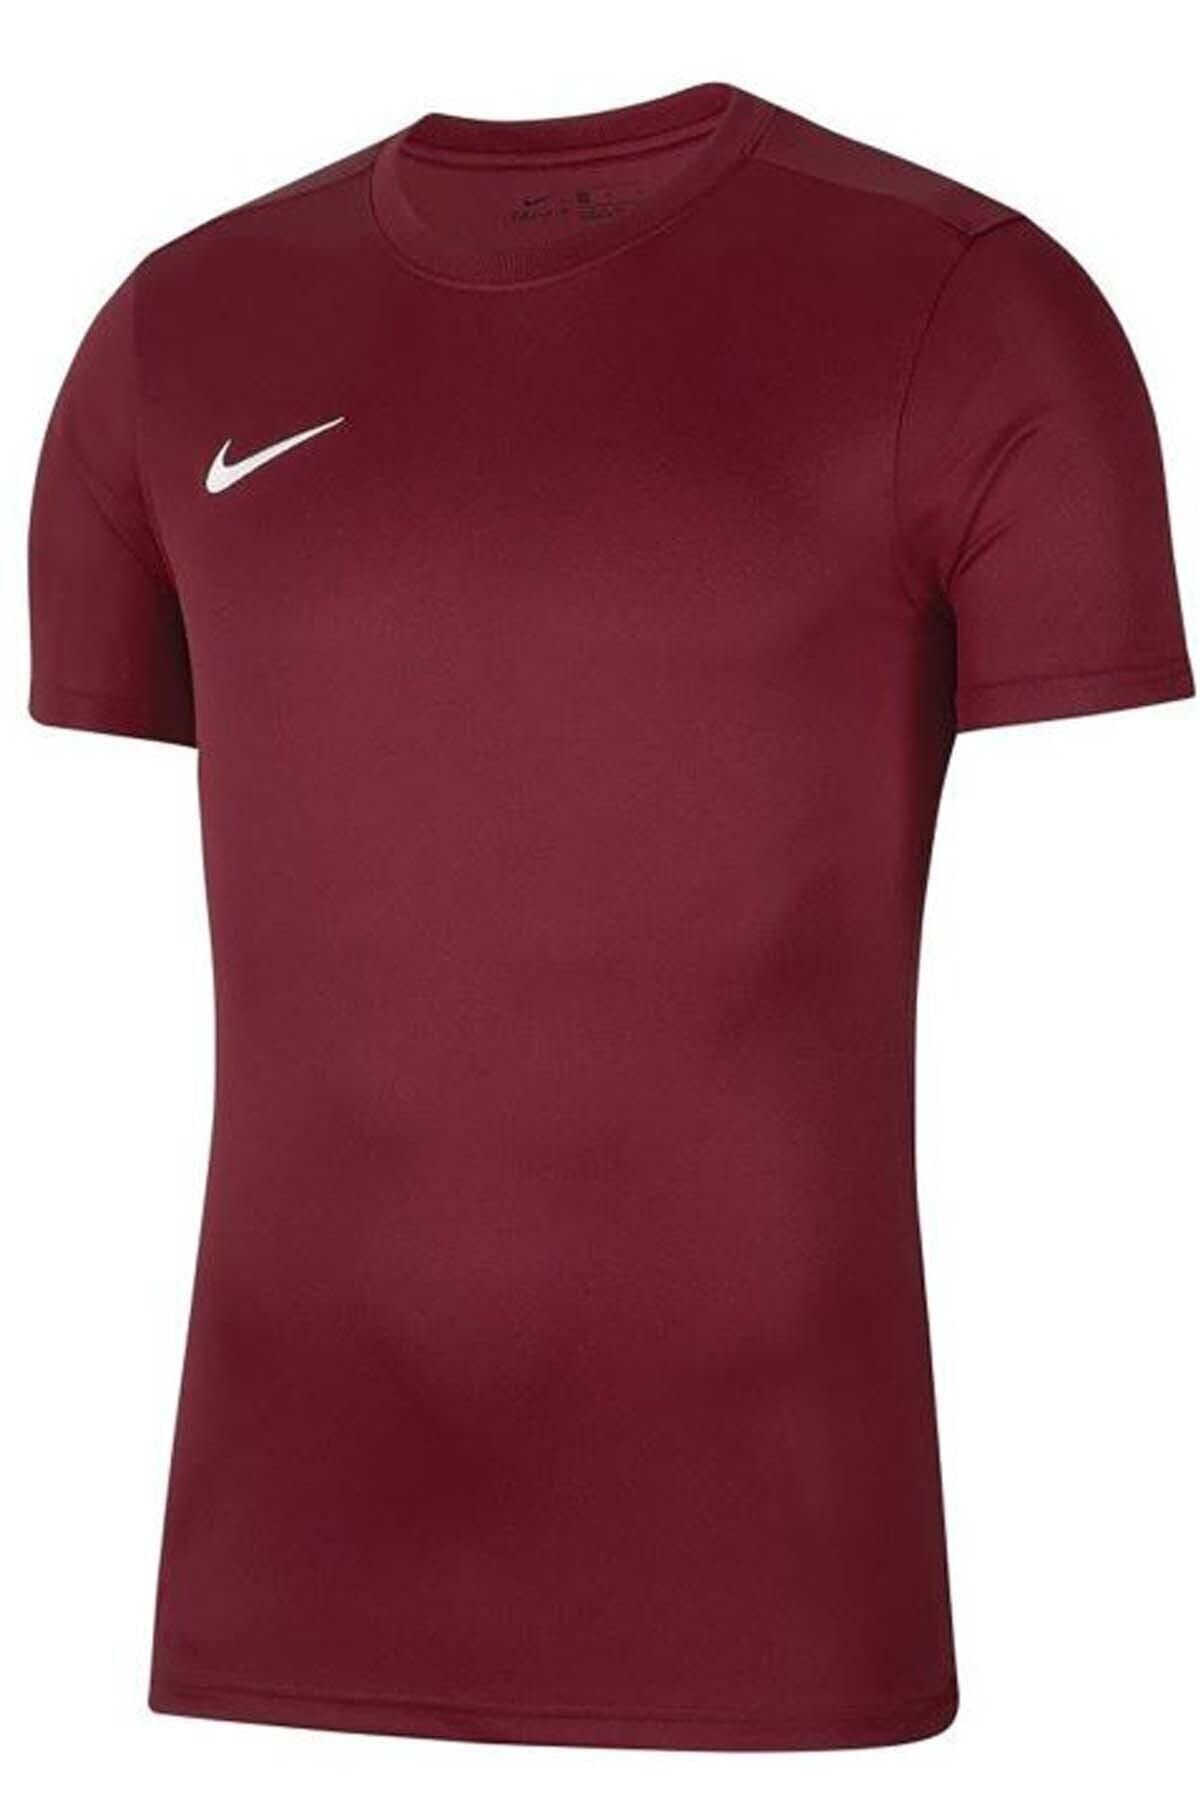 Nike Dry Park Vıı Jsy Ss Erkek Tişört